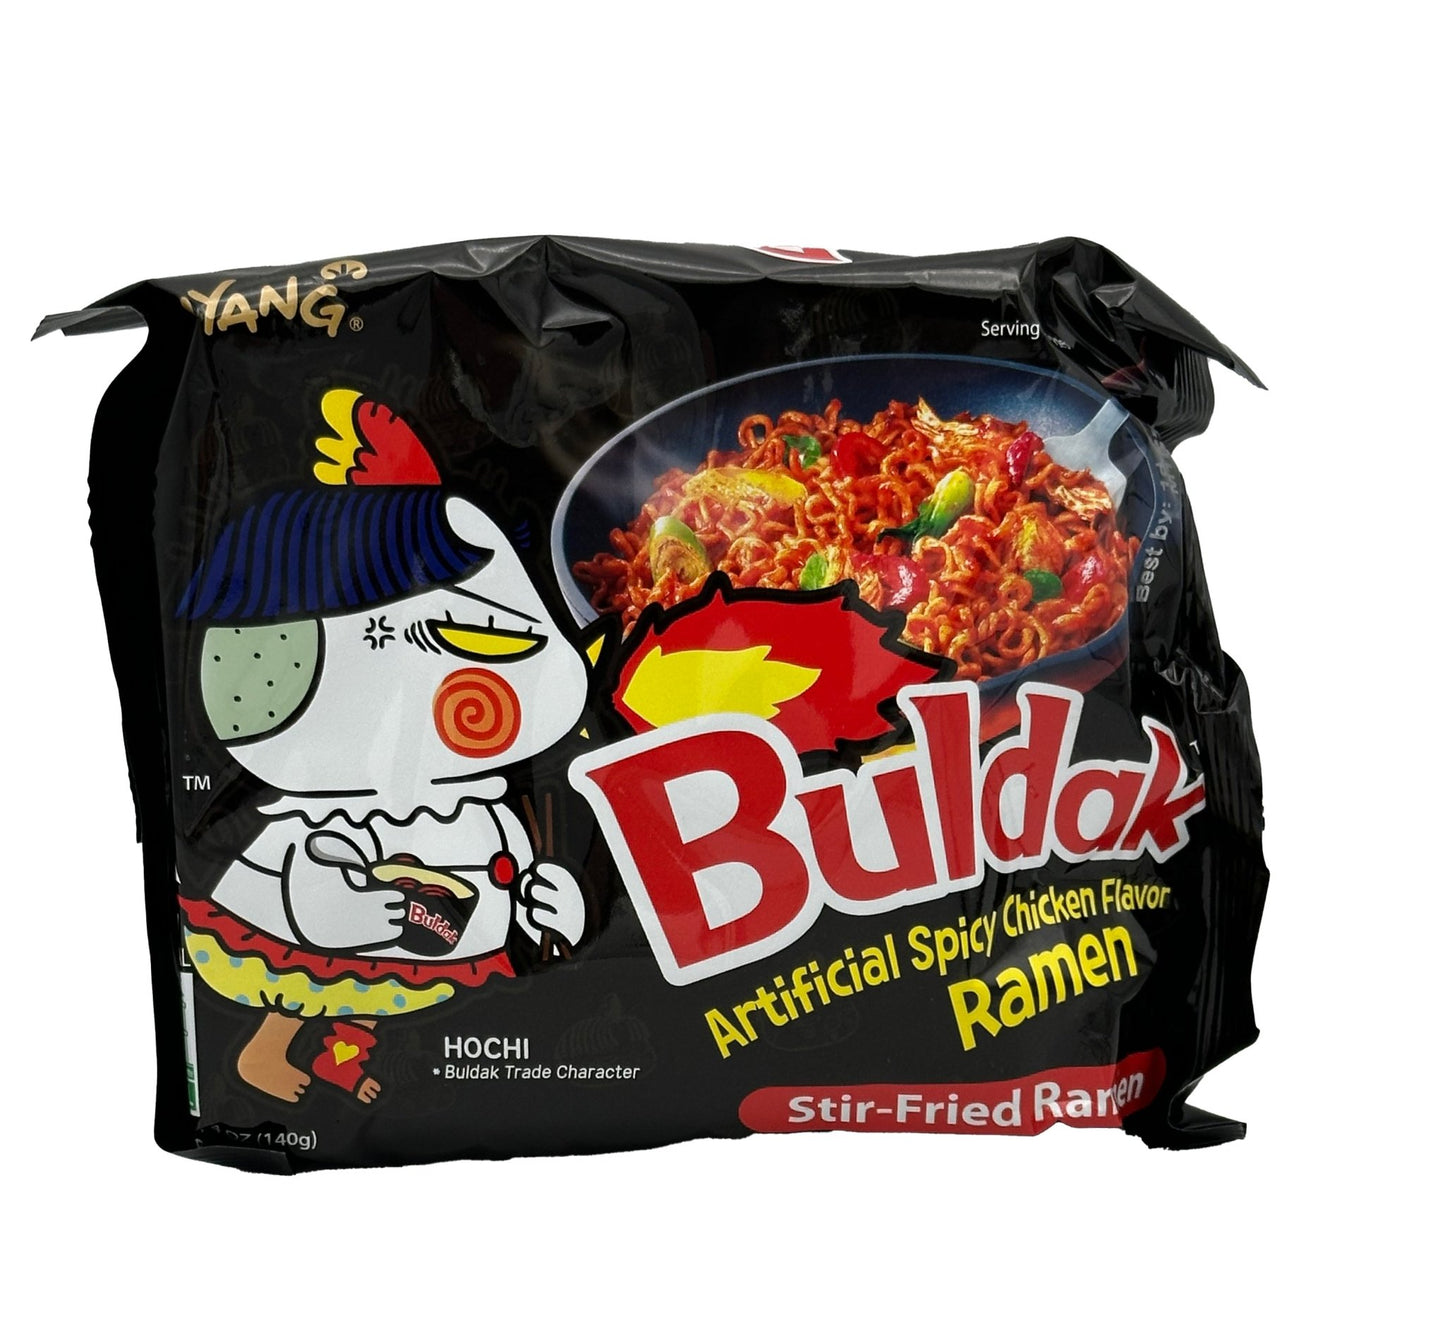 Buldak - Korean Stir-Fry Ramen - Instant Noodles - 1 Pack/Serving - Thurgood’s Goods